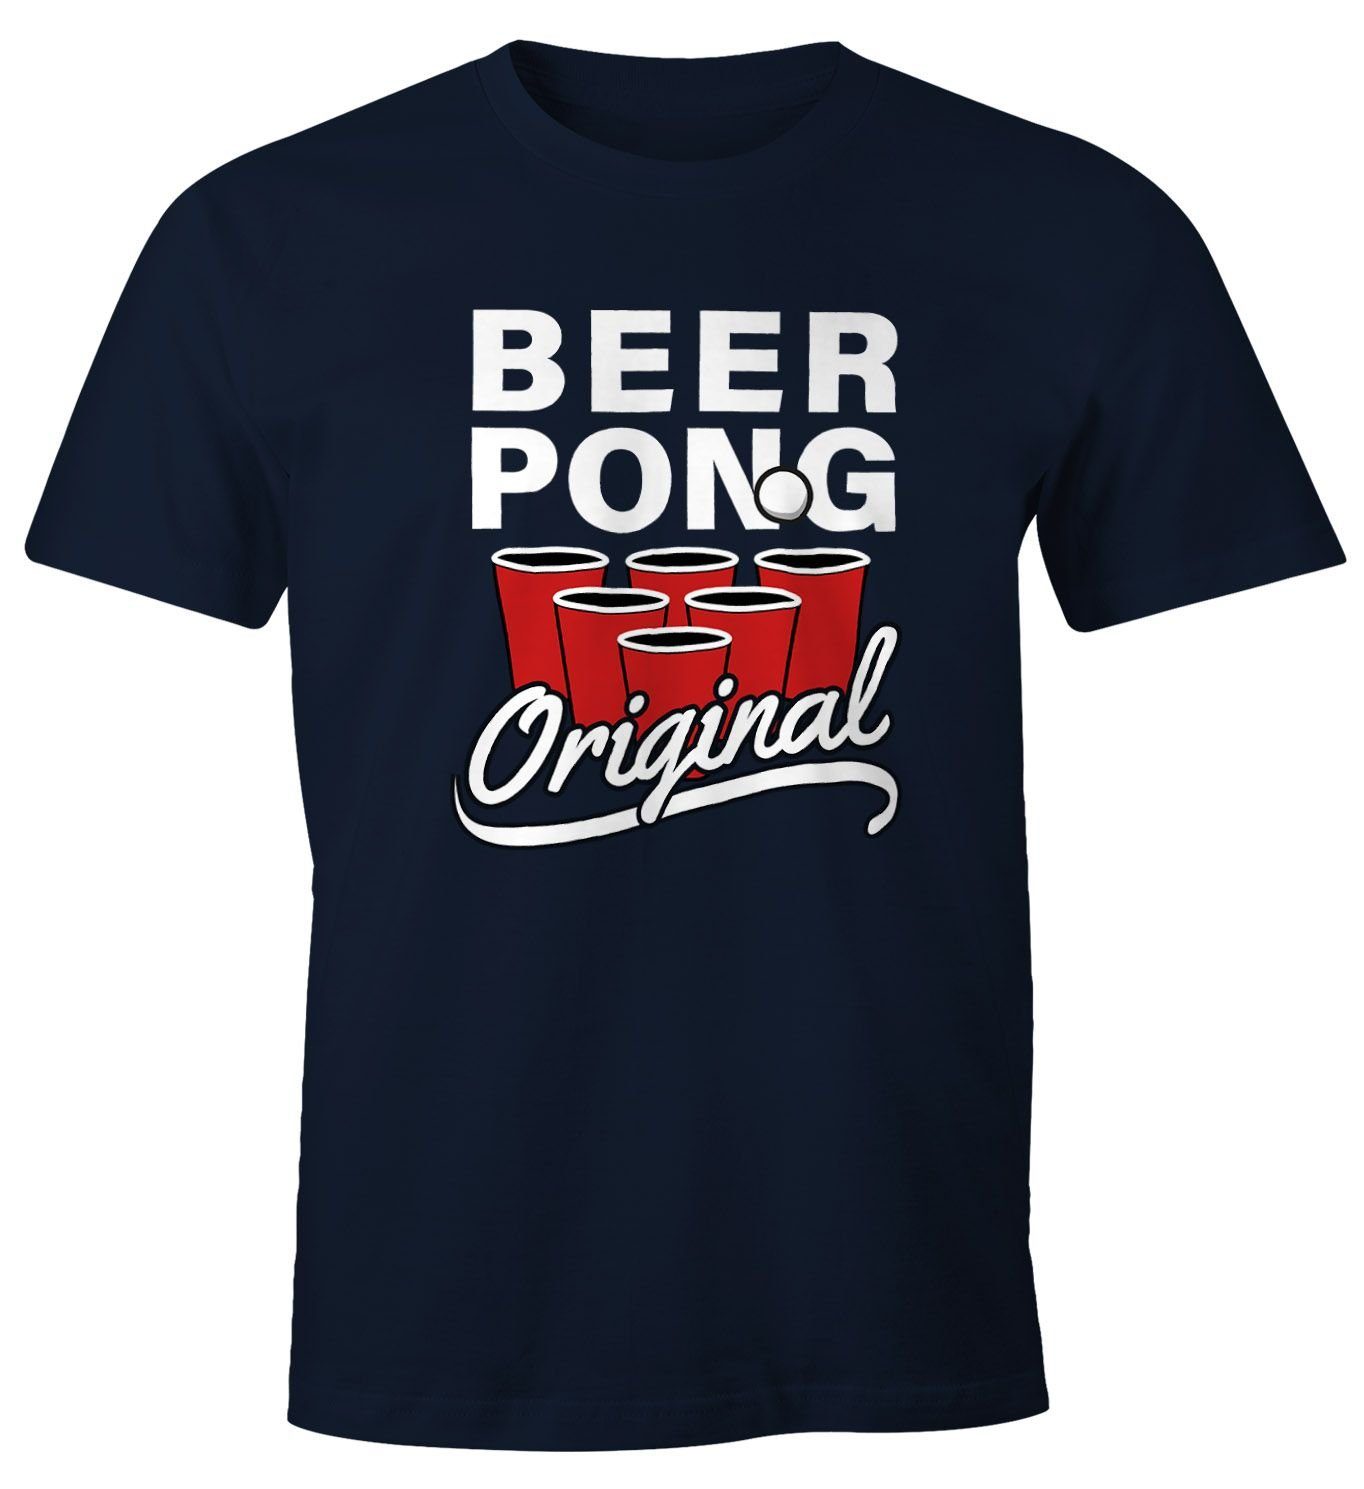 MoonWorks Print-Shirt Herren T-Shirt Beer Pong Original Bier Fun-Shirt Moonworks® mit Print navy